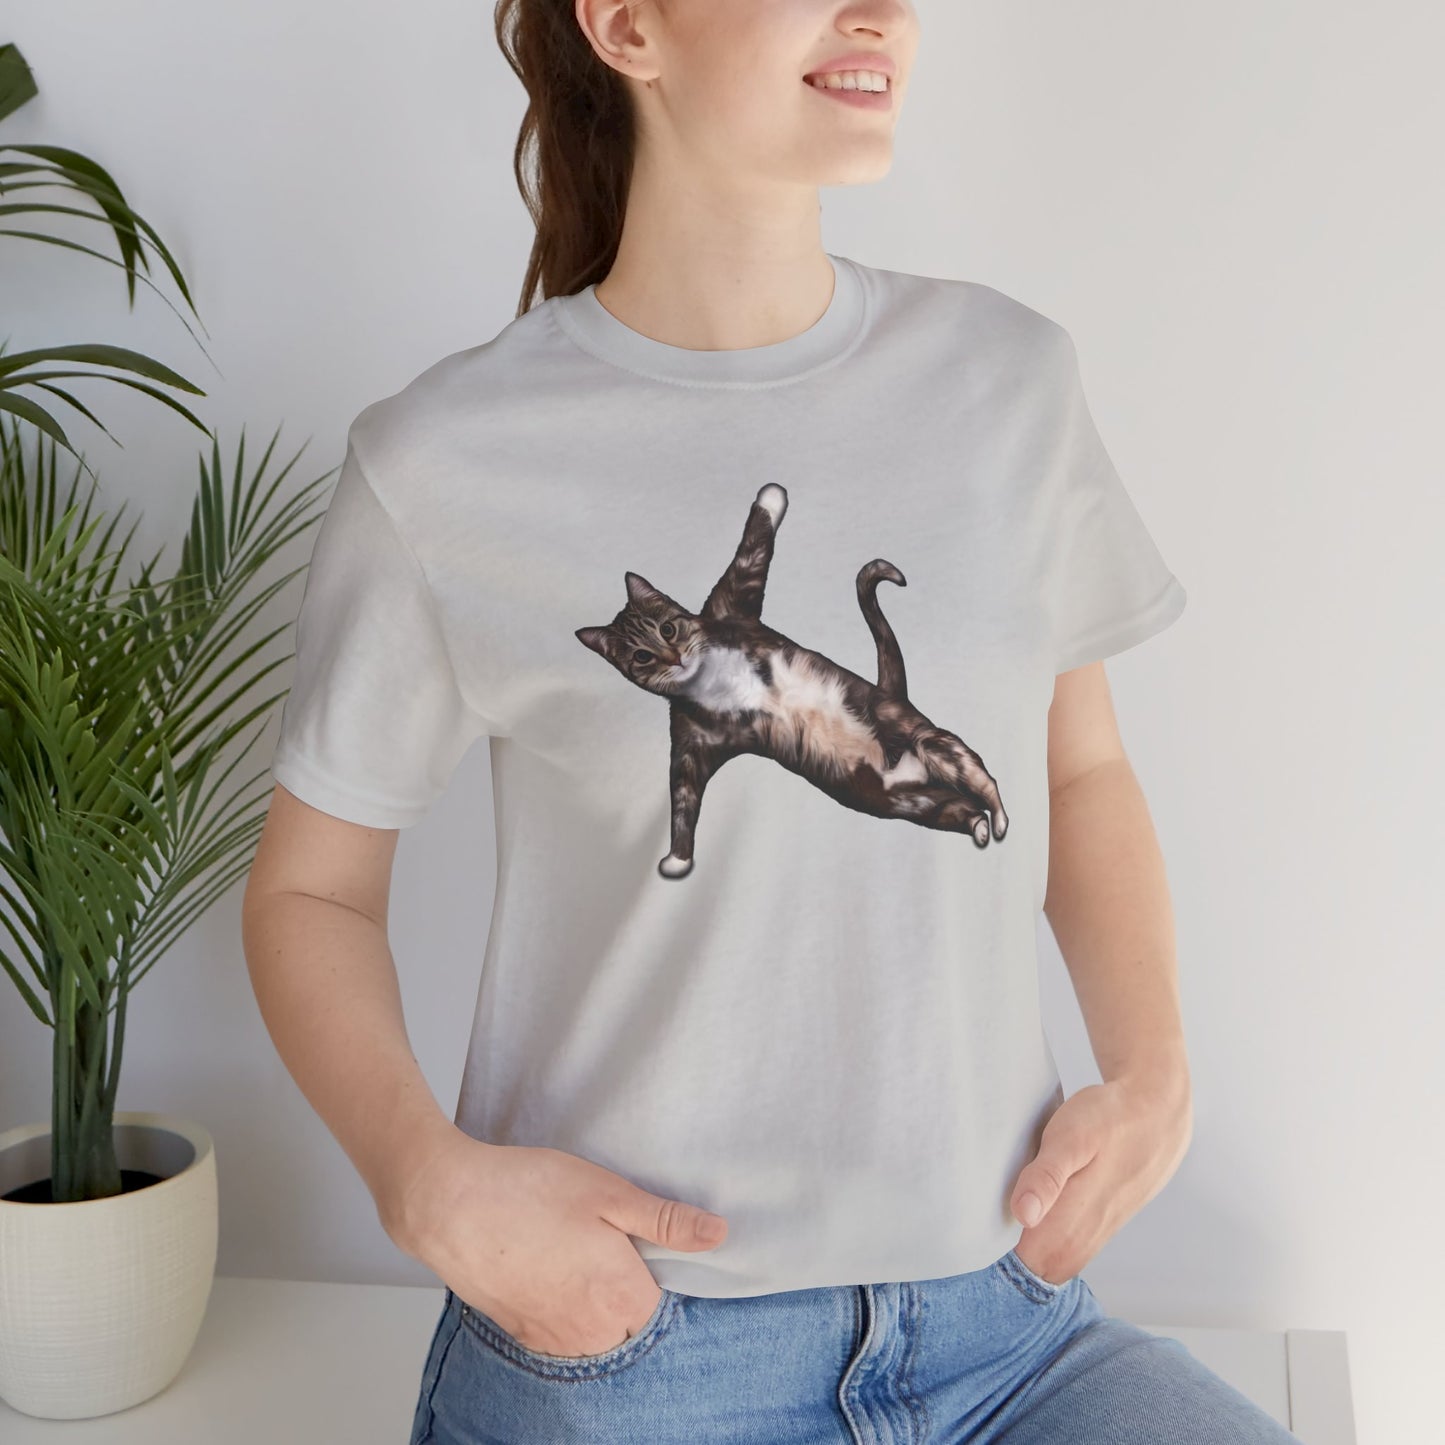 Yoga Pose T-Shirt